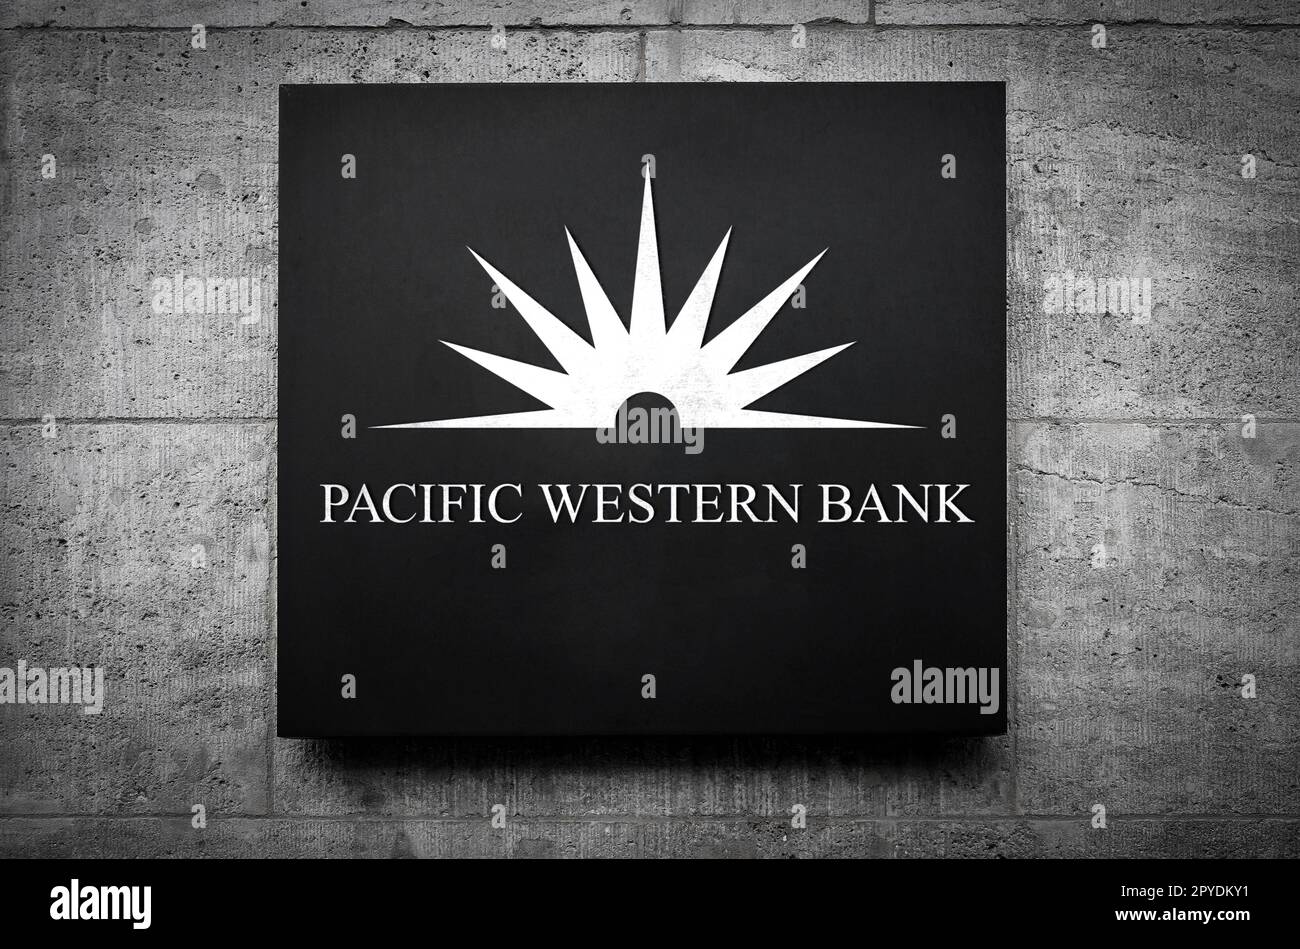 Pacific Western Bank - company logo on wall Stock Photo